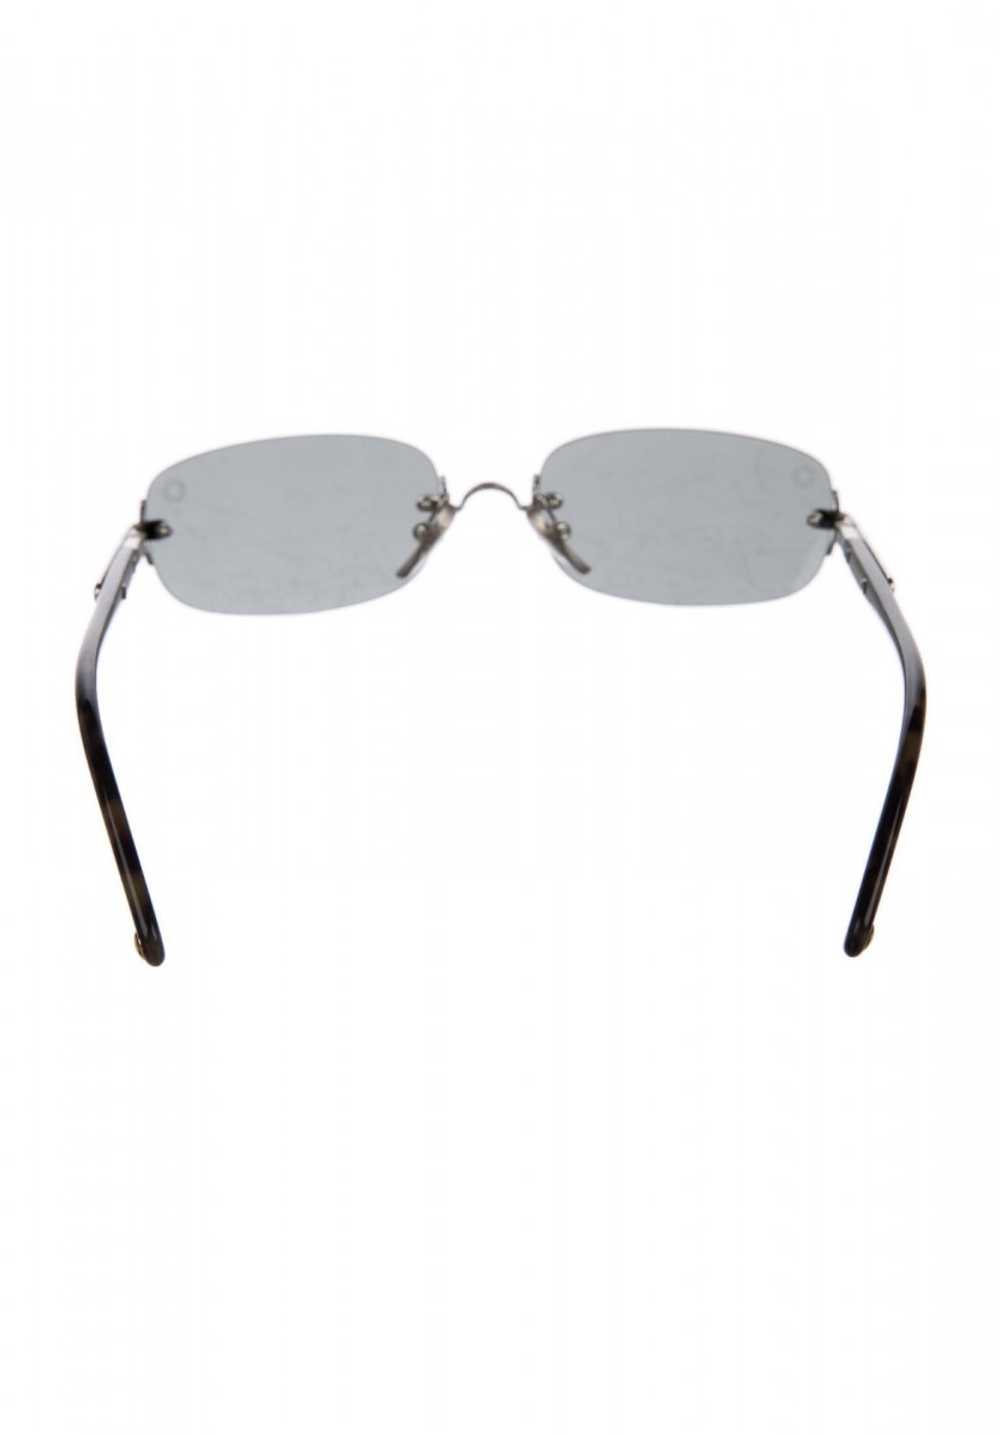 Montblanc Square Sunglasses - Tinted - image 2